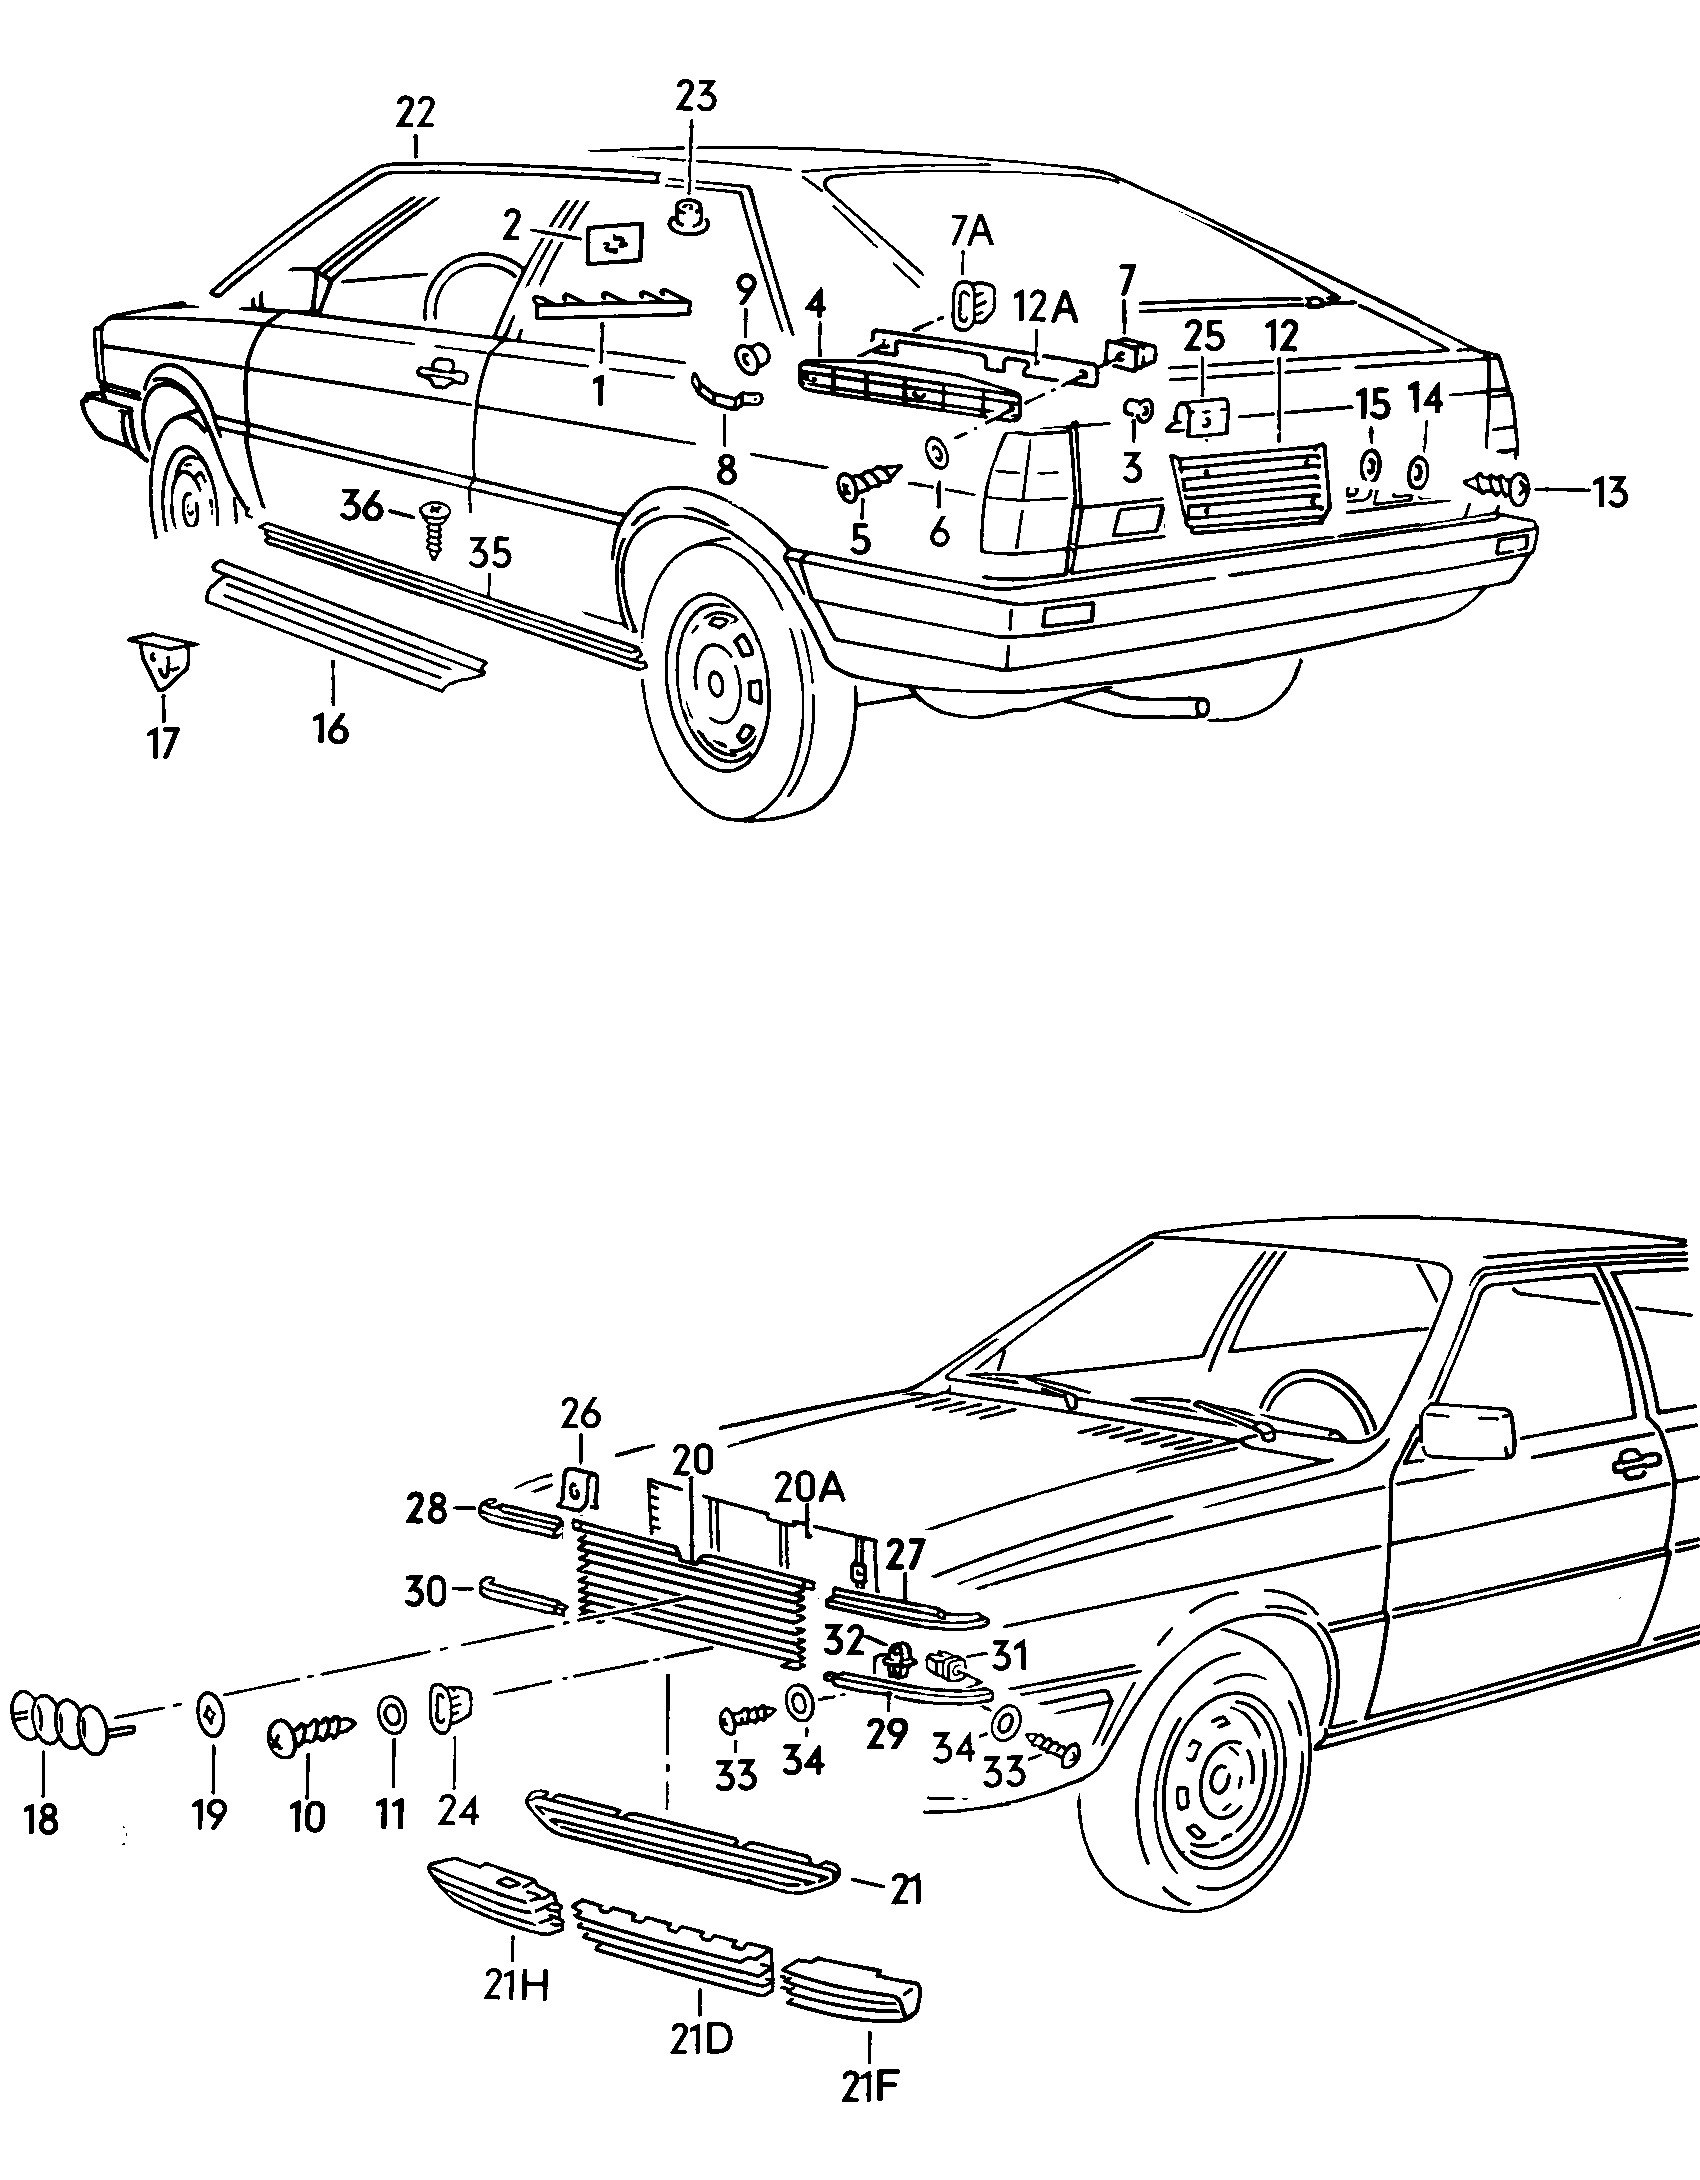 napisy - Audi Coupe(ACO)  